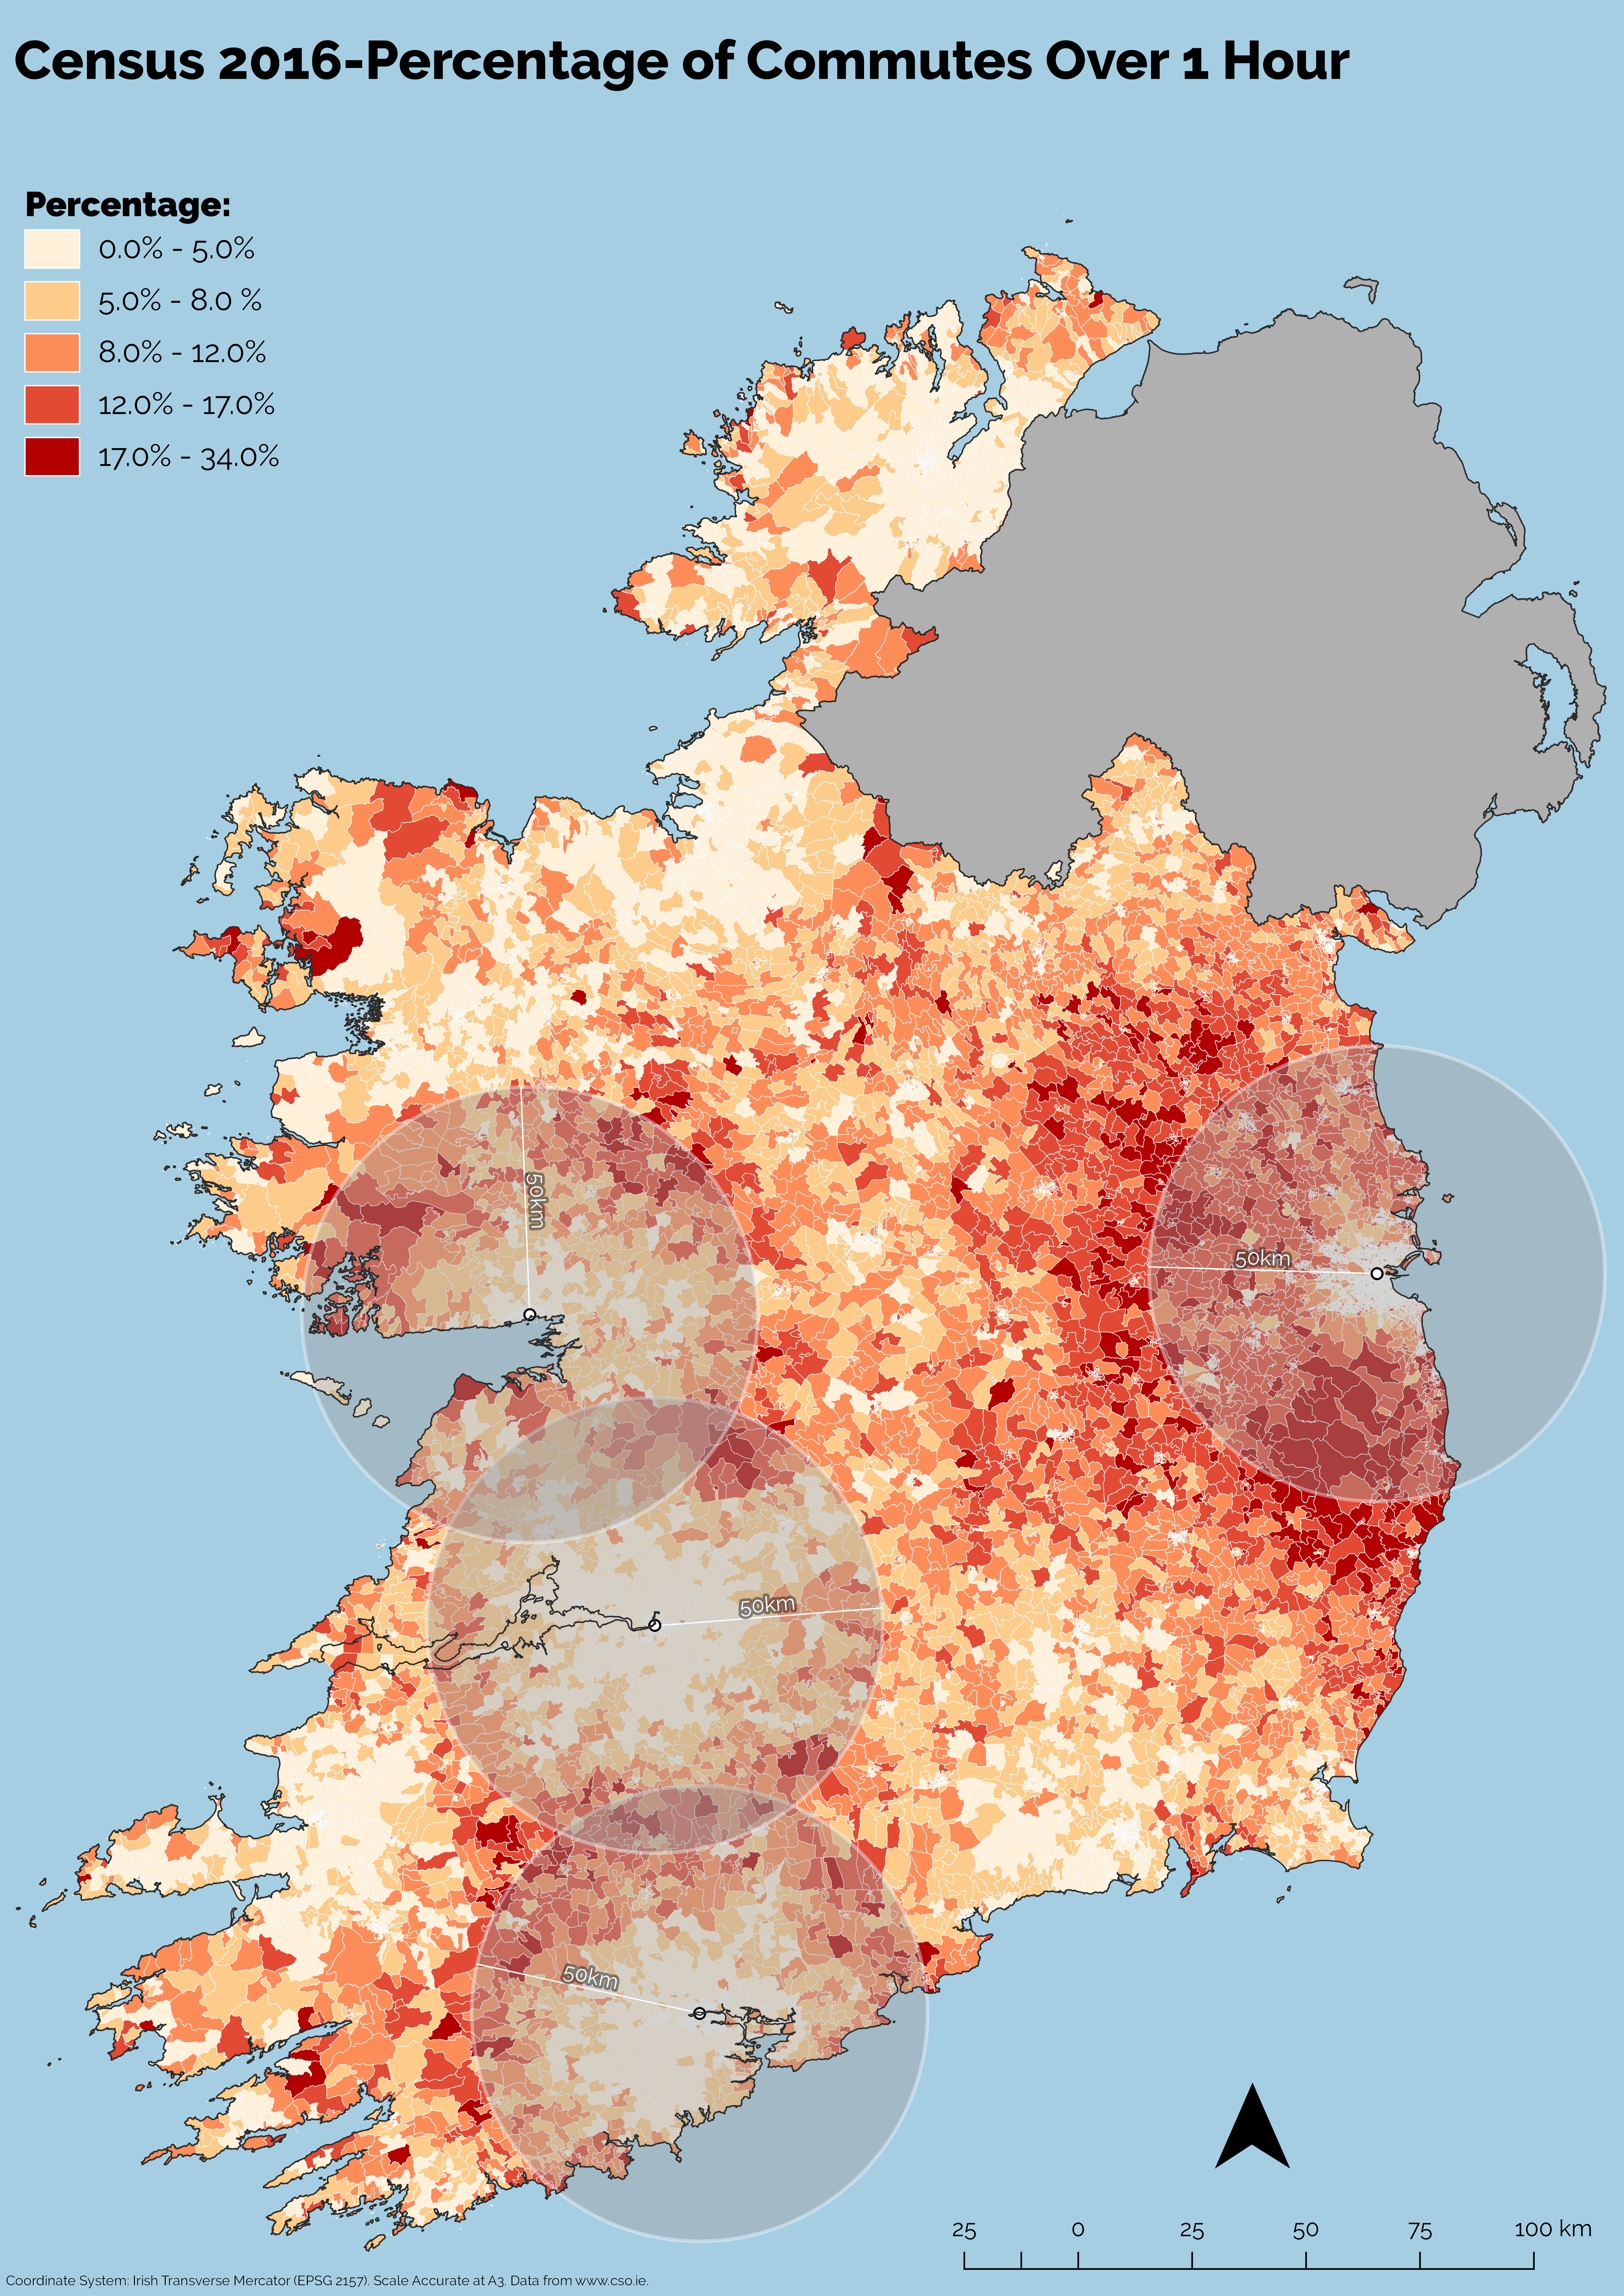 Commuting Time Ireland-Census 2016